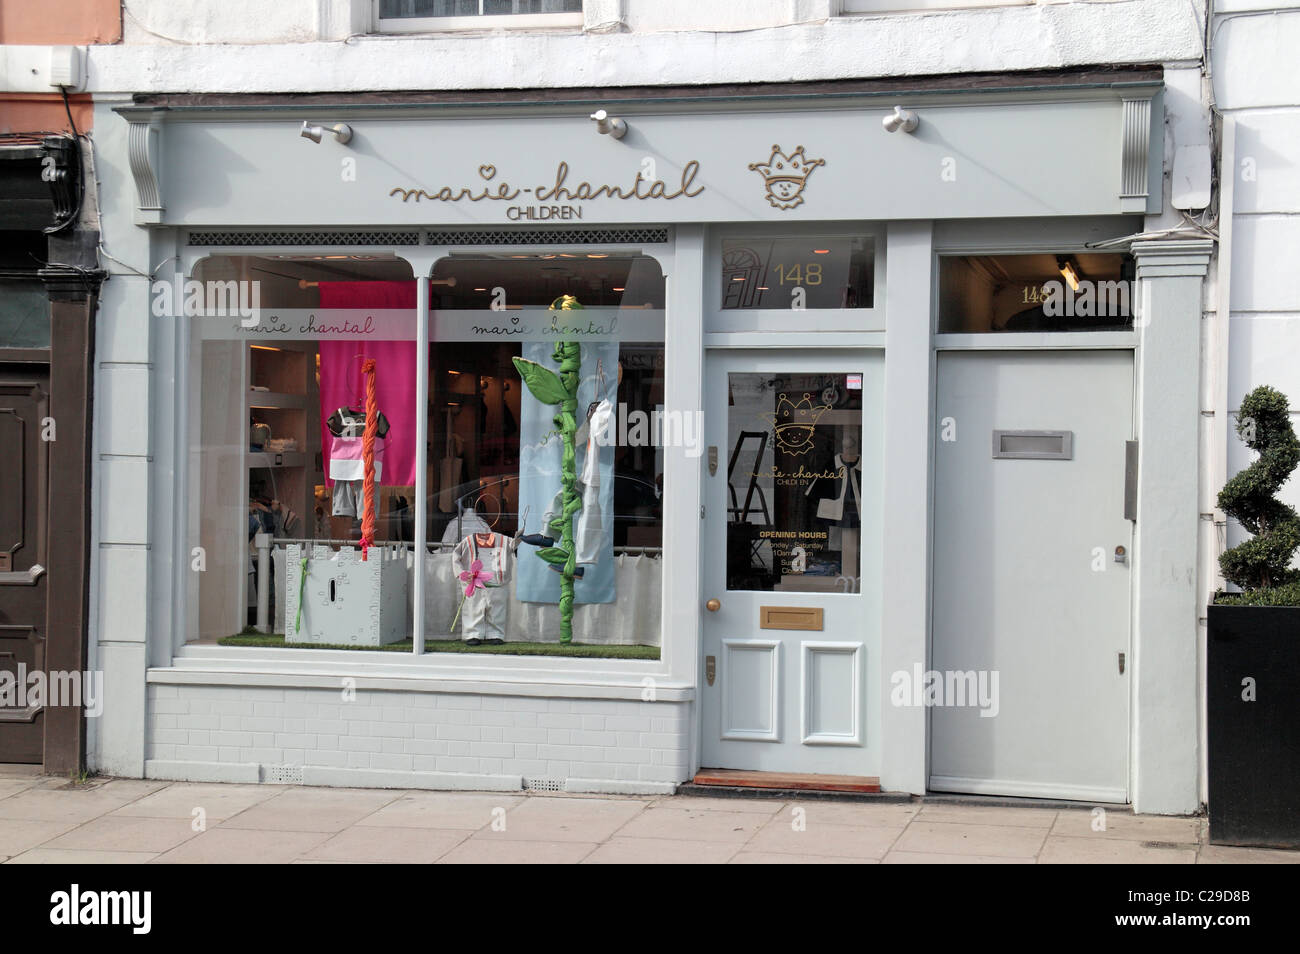 The Marie-Chantel children's clothing store on Walton Street, Kensington, London, SW3, UK. Stock Photo